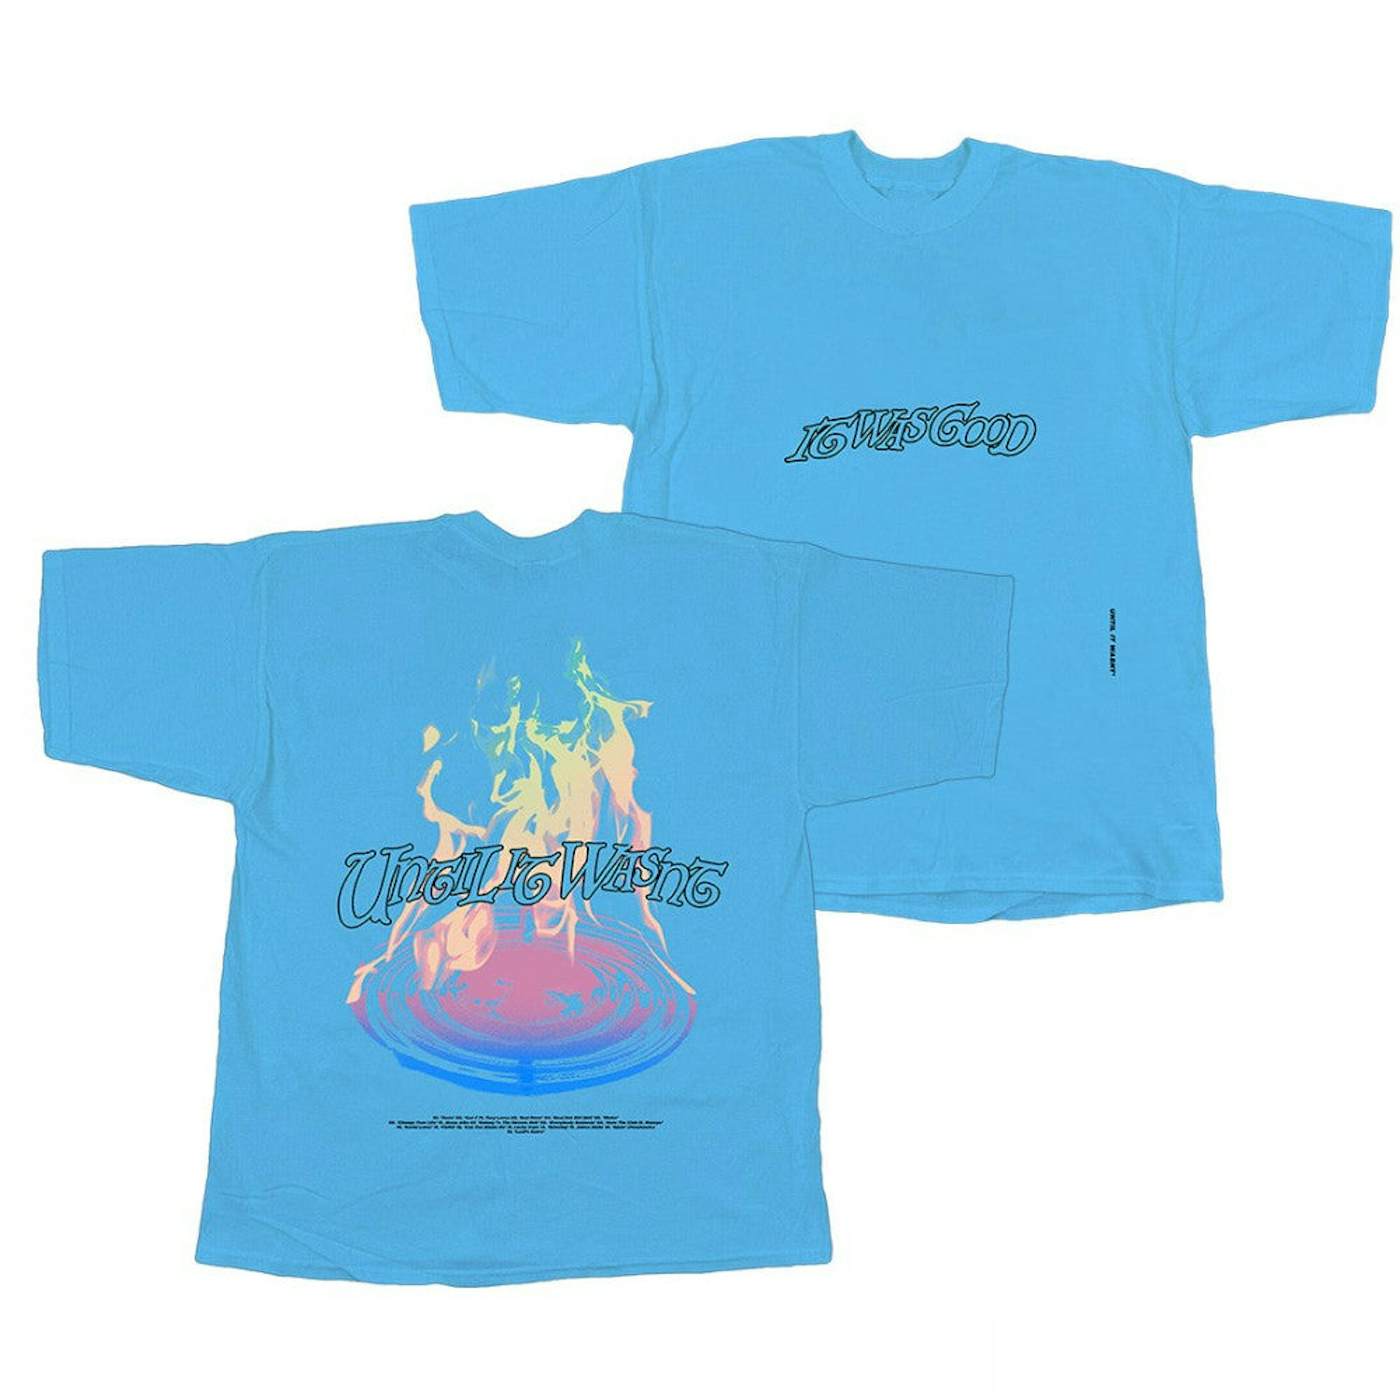 Kehlani IWGUIW (Sapphire Blue) T-Shirt